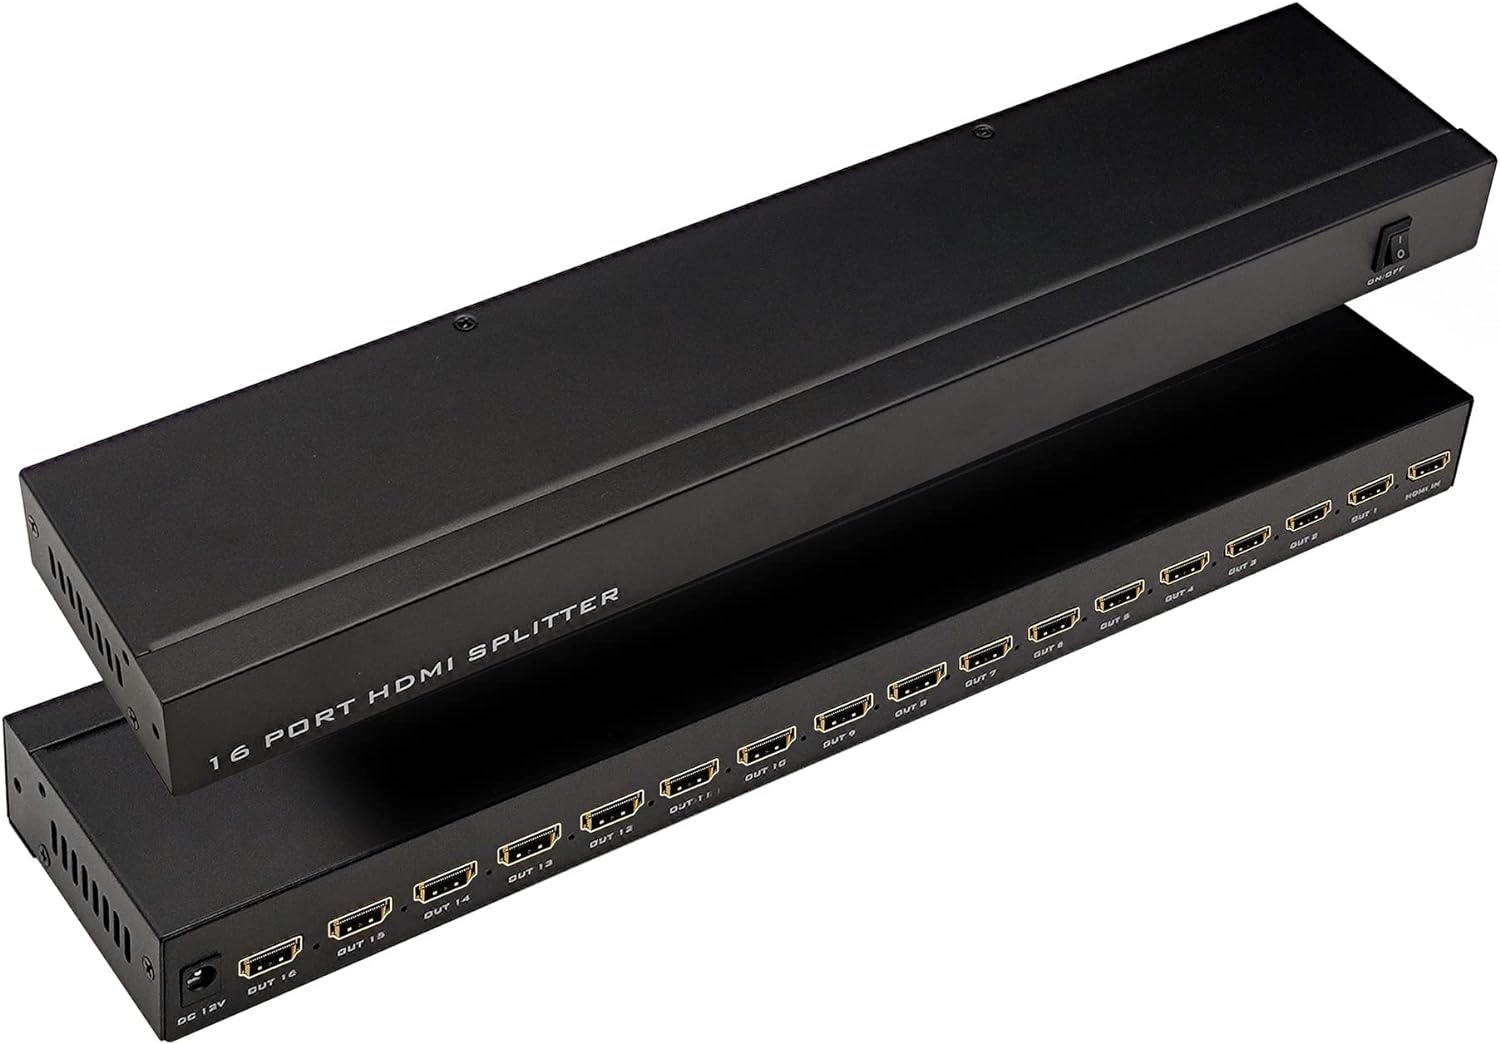 Divisor HDMI de montaje en rack 4K 1 en 16 salidas, 1x16 16 puertos HDMI TV Splitter/Duplicador/Distribuidor, soporta 4K/5MP/1080P 3D para Xbox PS4 PS3 Fire Stick Blue Ray Apple TV HDTV